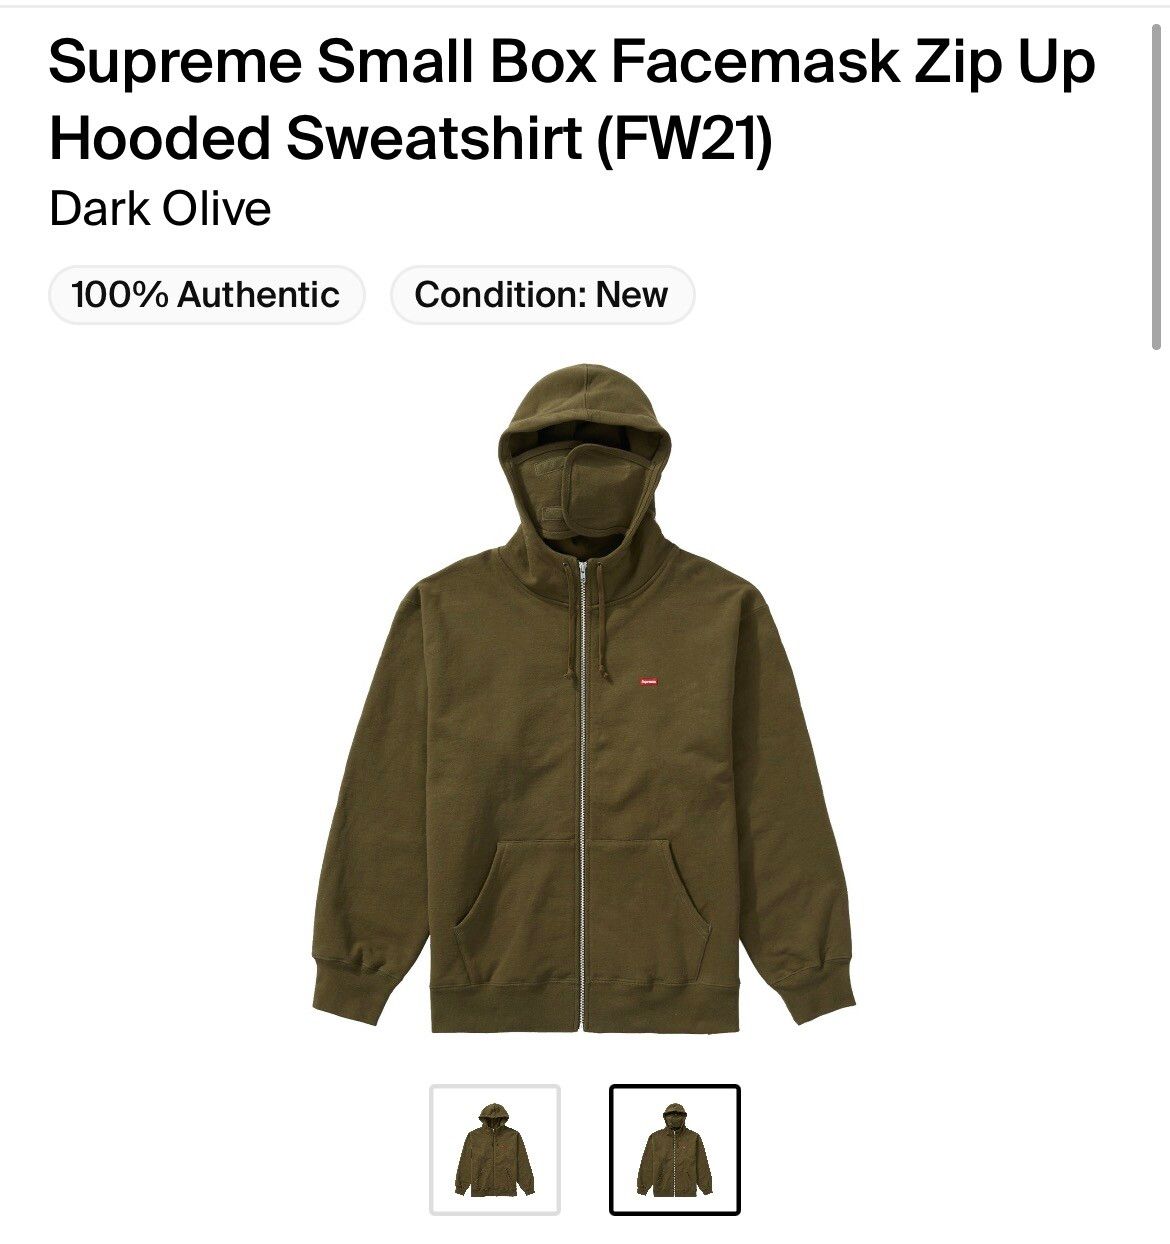 Supreme Small Box Facemask Zip Up Hooded Sweatshirt Heather Grey